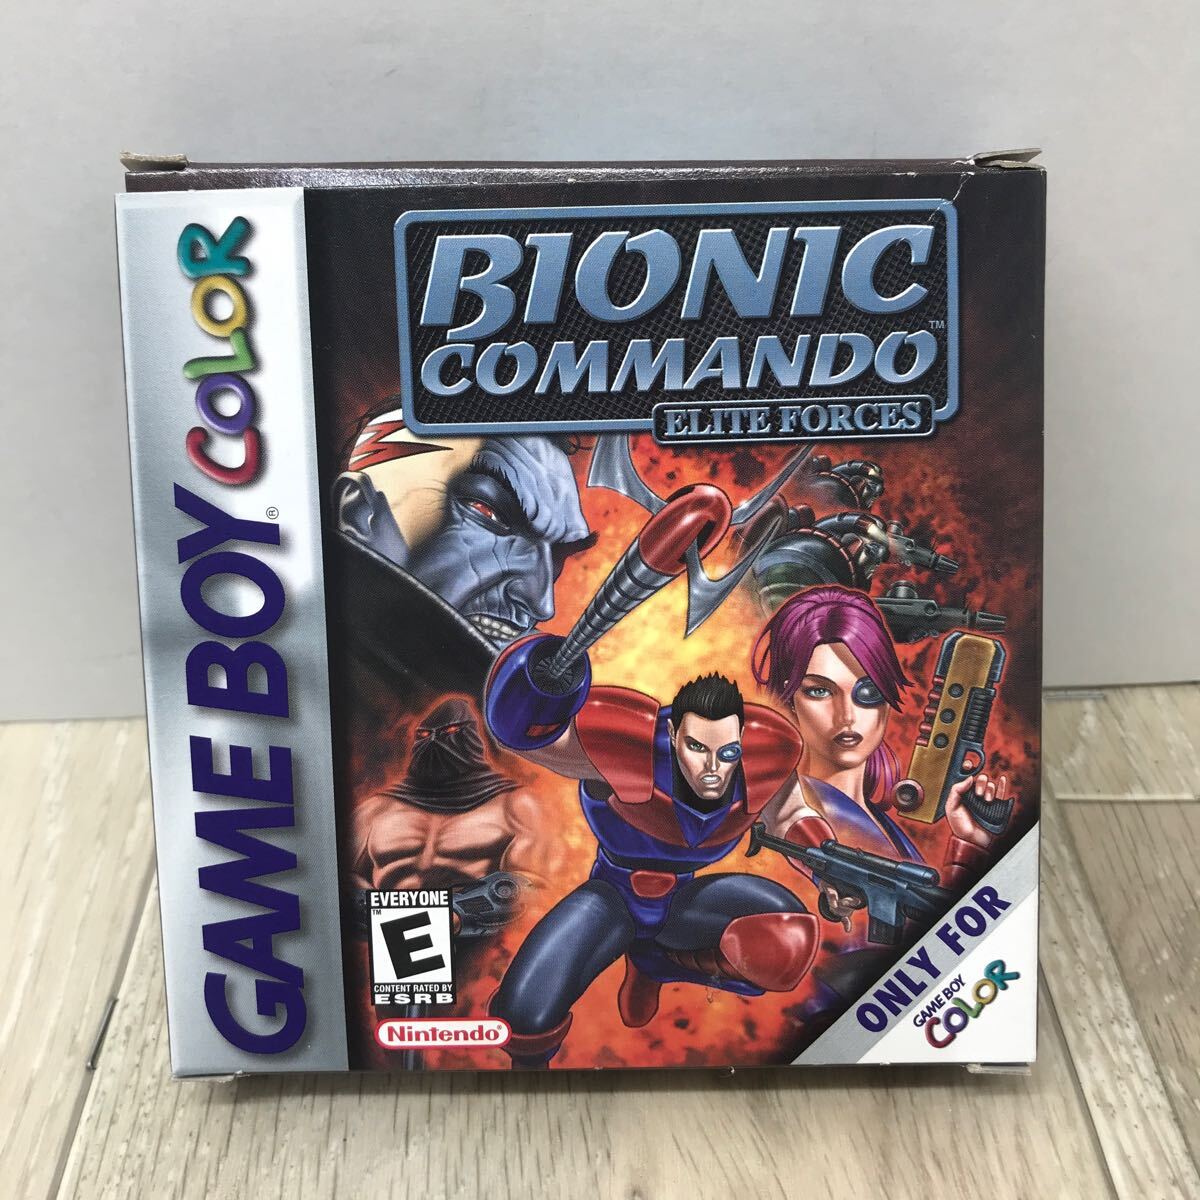 051 A ゲームボーイ カラー ソフト / バイオニック コマンドー 海外版 BIONIC COMMANDO ELITE FORCES Nintendo の画像5